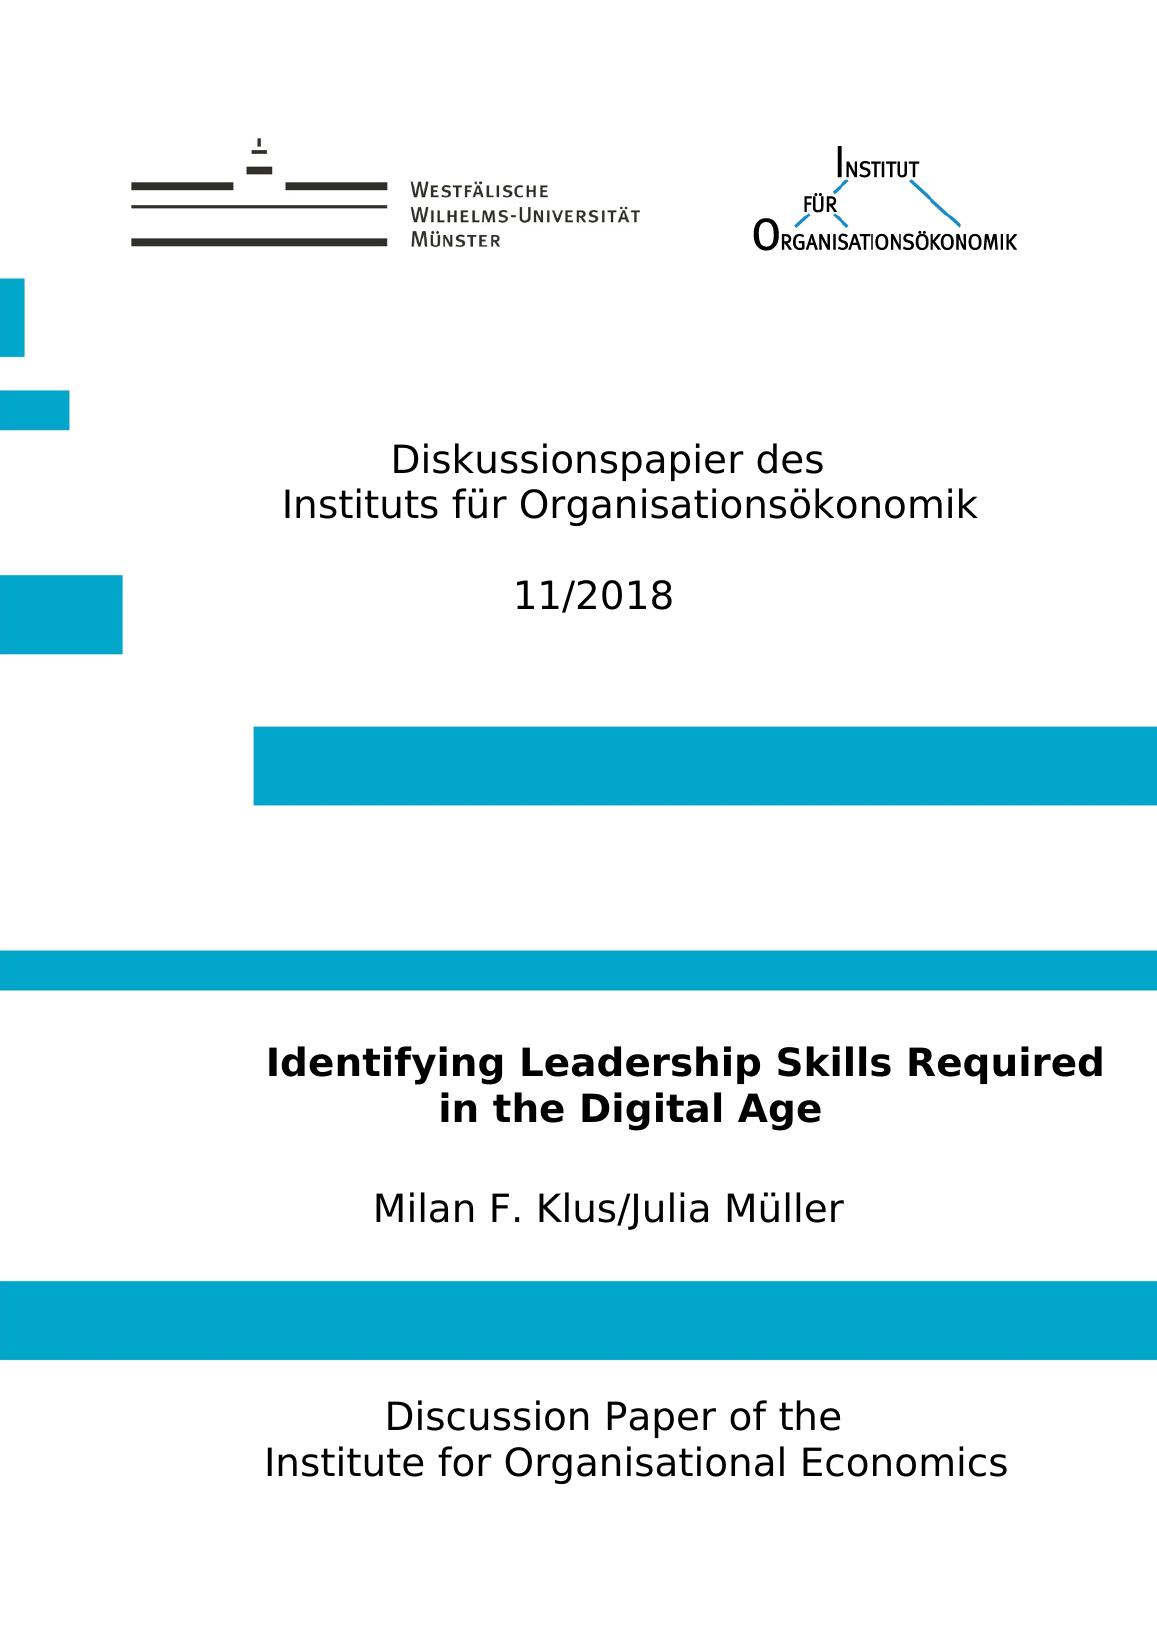 Leadership Skills Requirement in Digital Age Information 2022_1